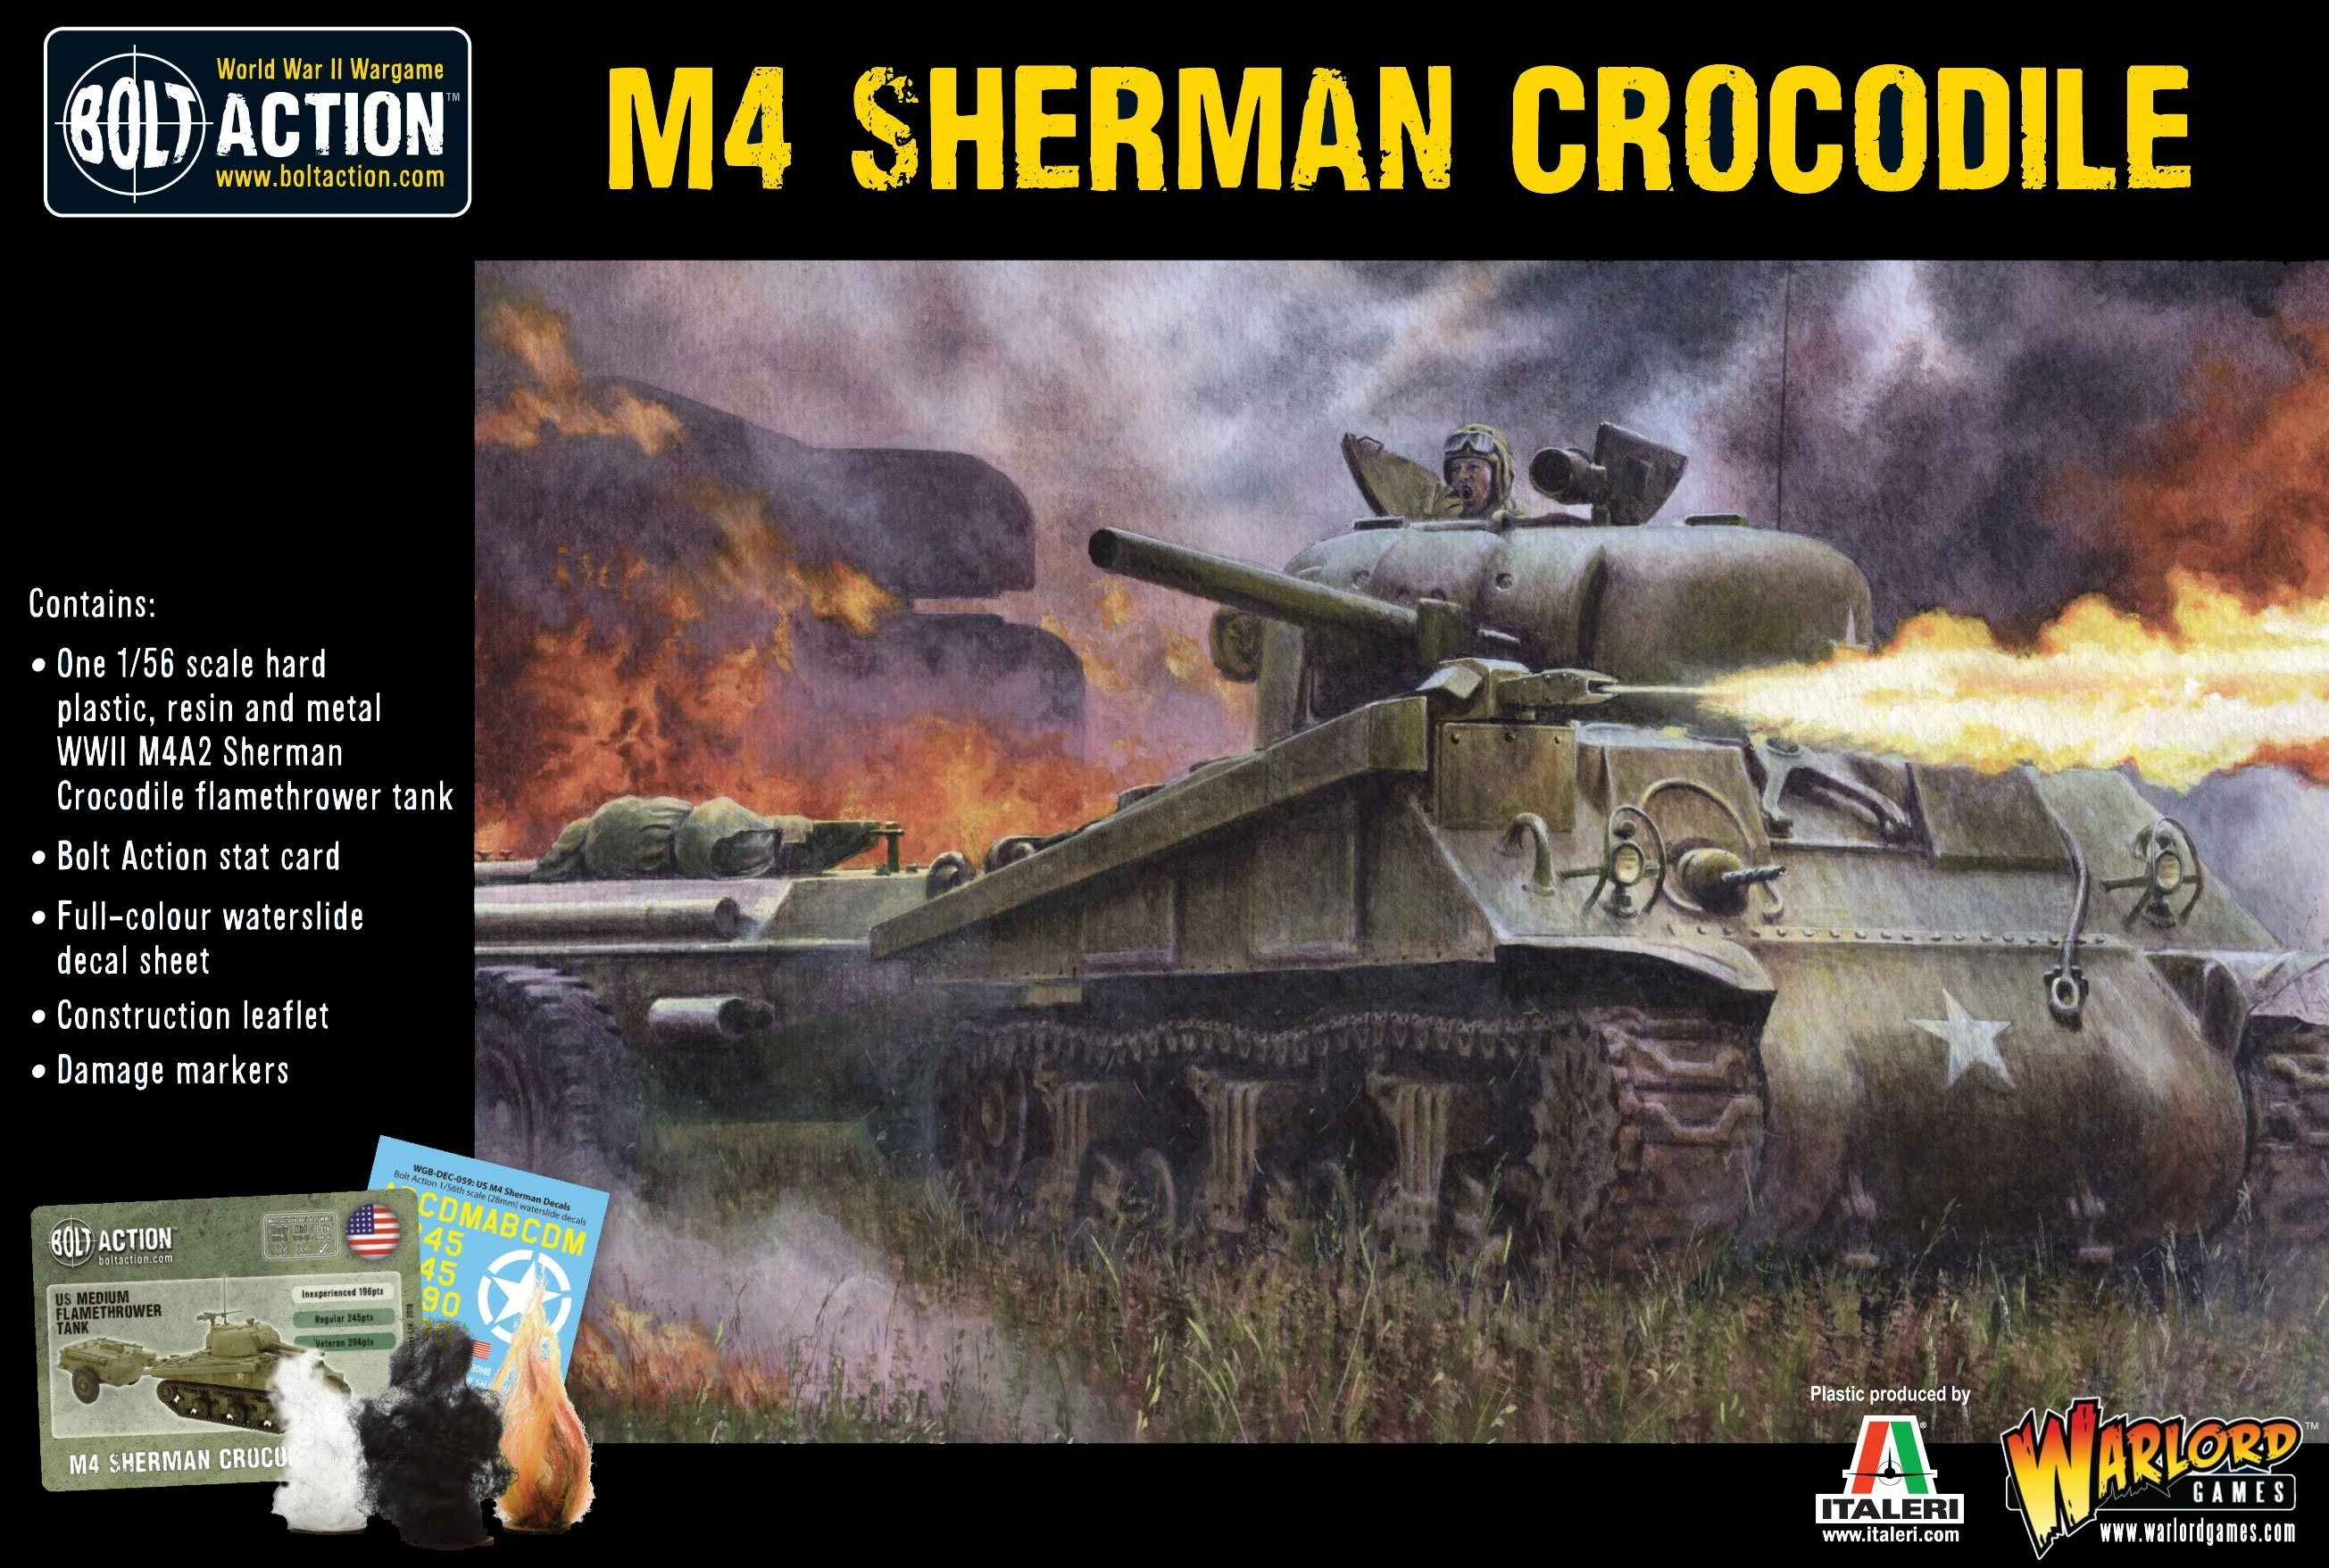 M4 SHERMAN CROCODILE